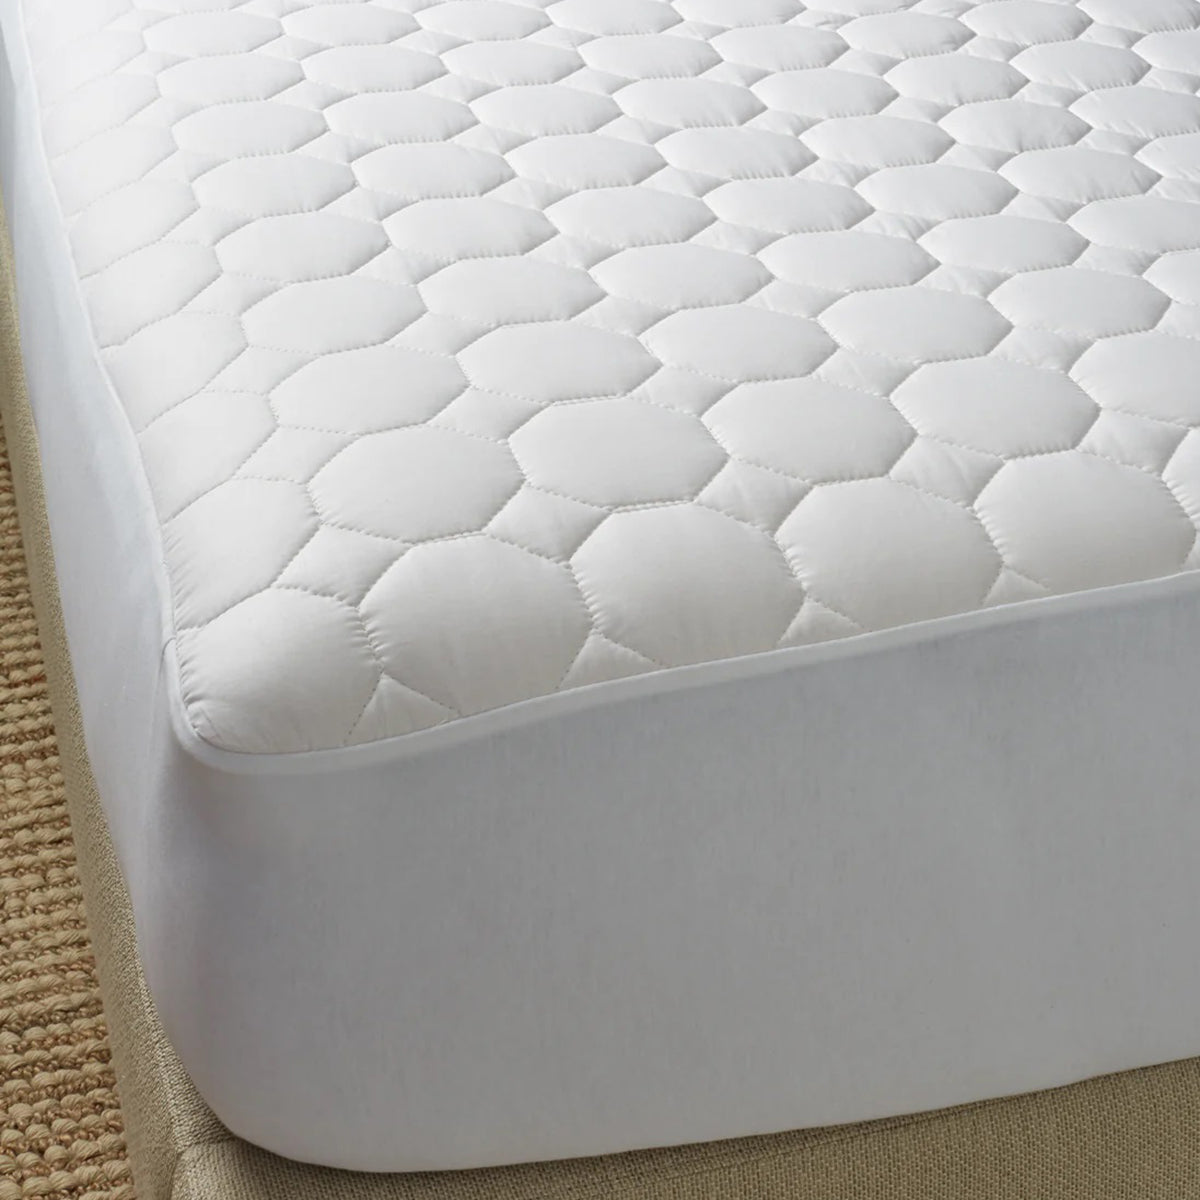 Image of a mattress corner with a white mattress pad covering the mattress